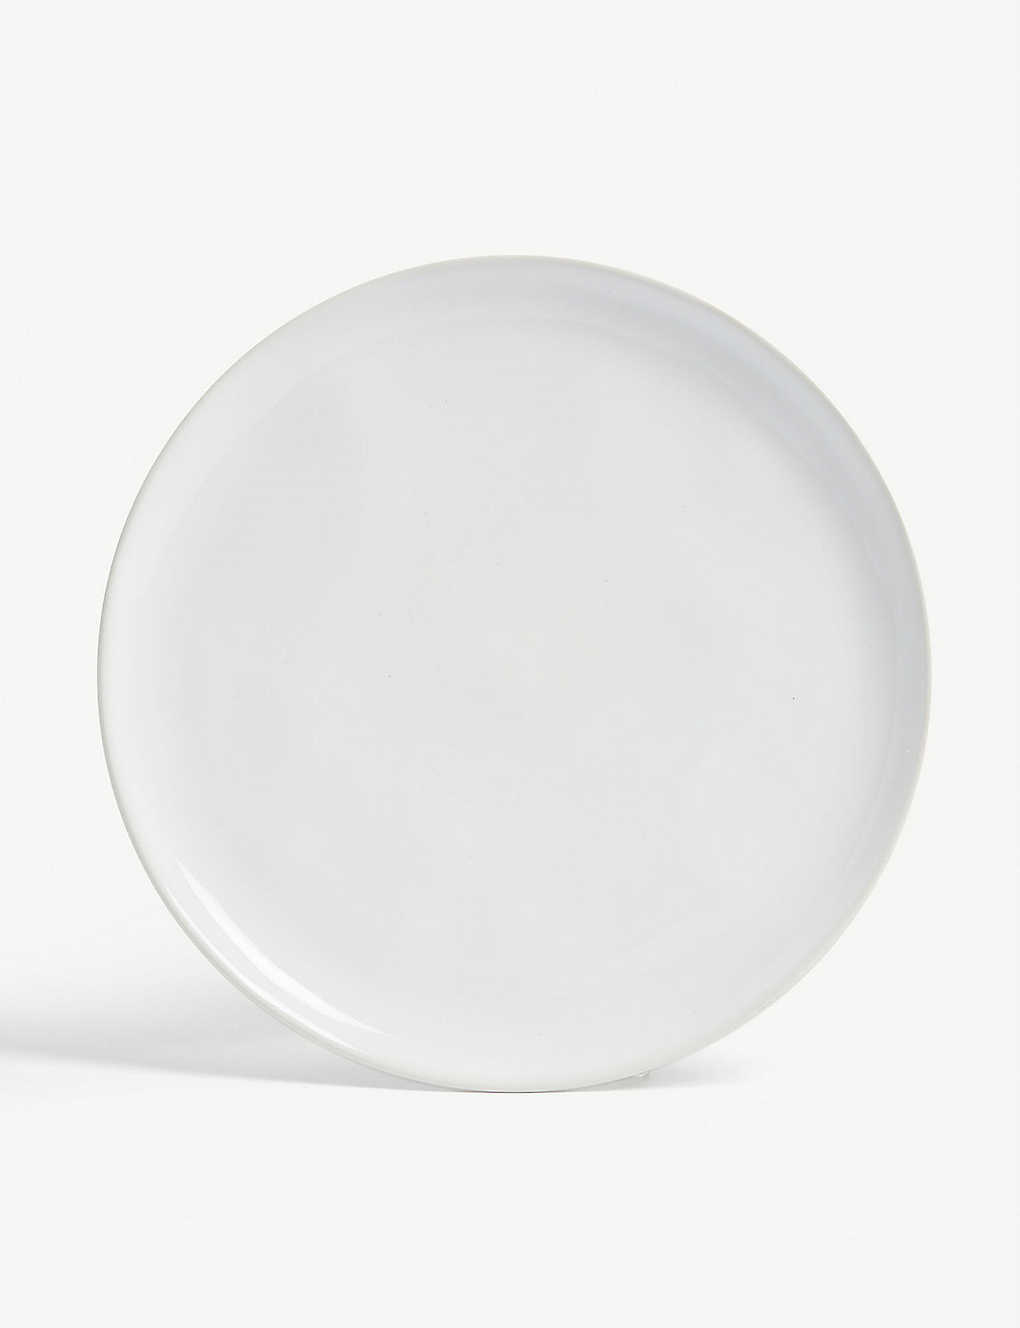 THE WHITE COMPANY |gxb TCh v[g Portobello side plate #Grey